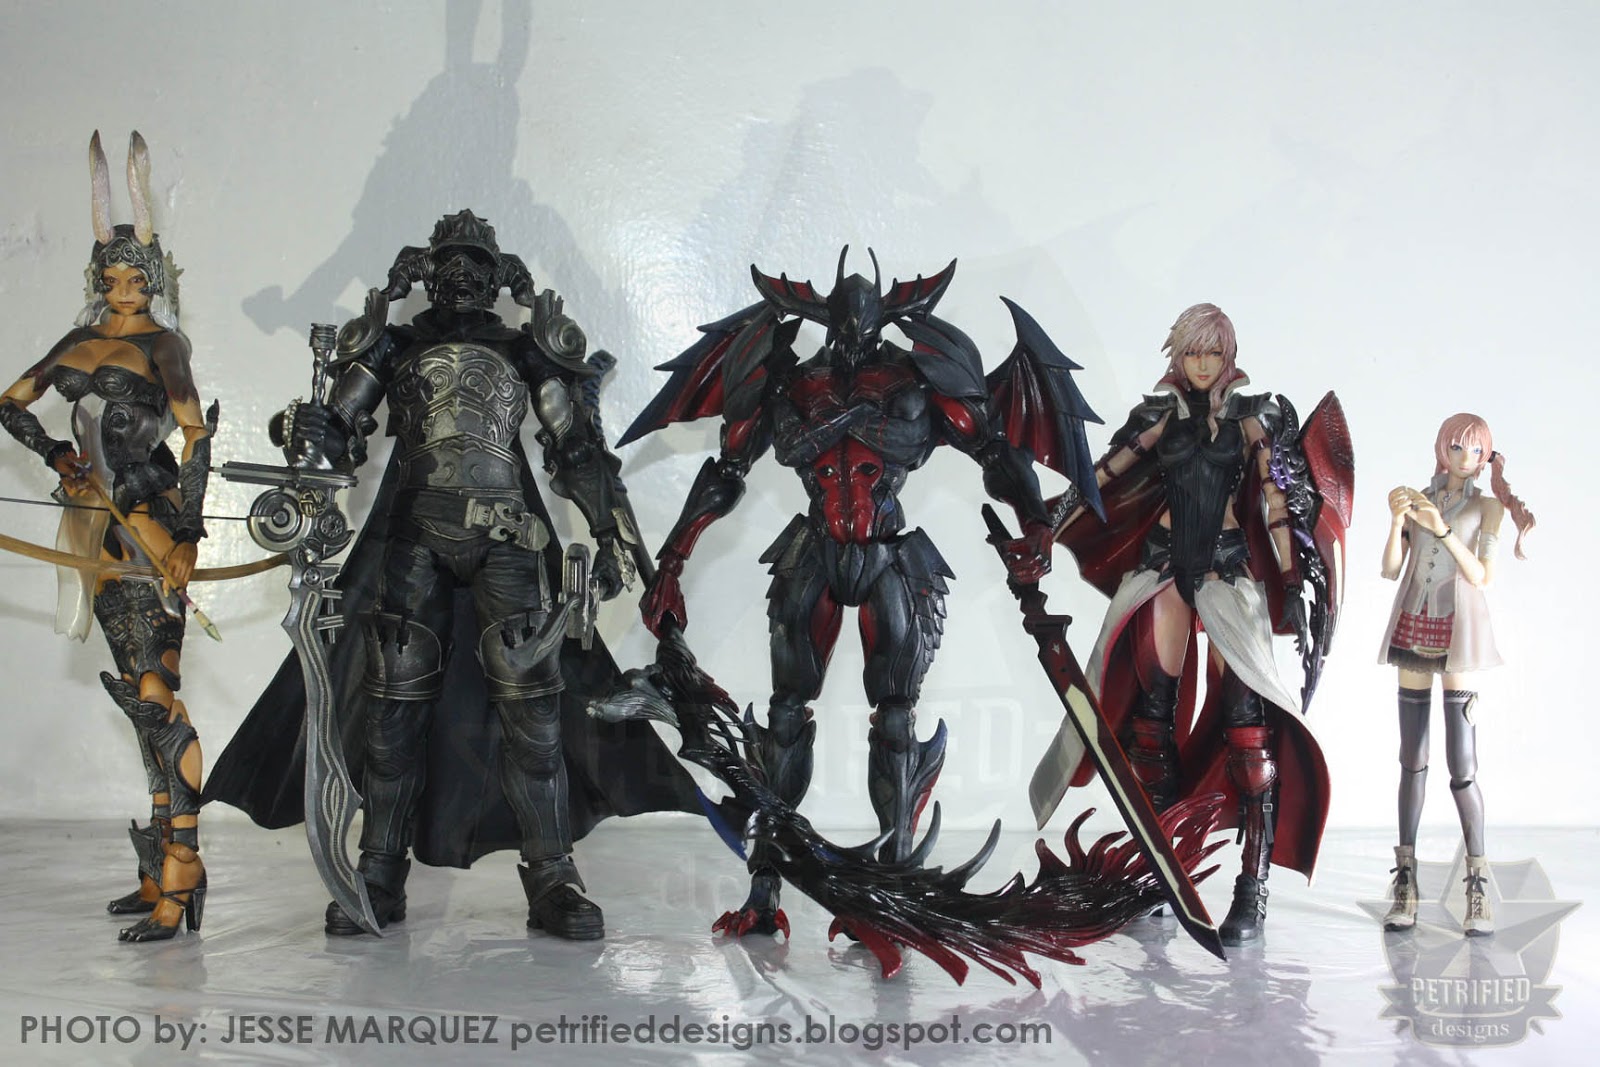 Play-Arts Kai Monster Hunter Cross Diablos Armor Figure Video Review &  Images